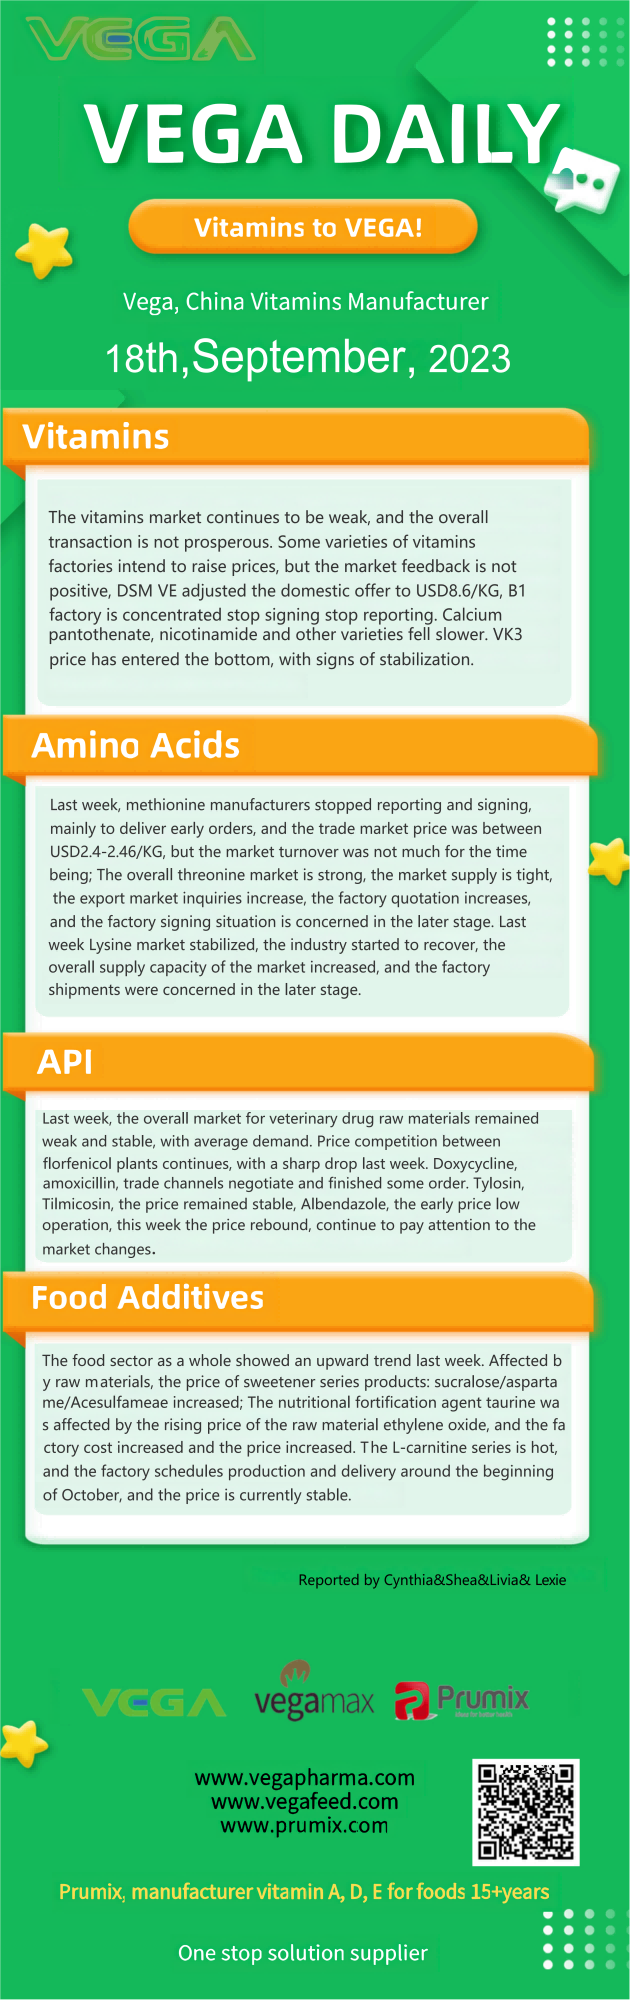 Vega Daily Dated on Sept 18th 2023 Vitamin Amino Acid API Food Additives.png